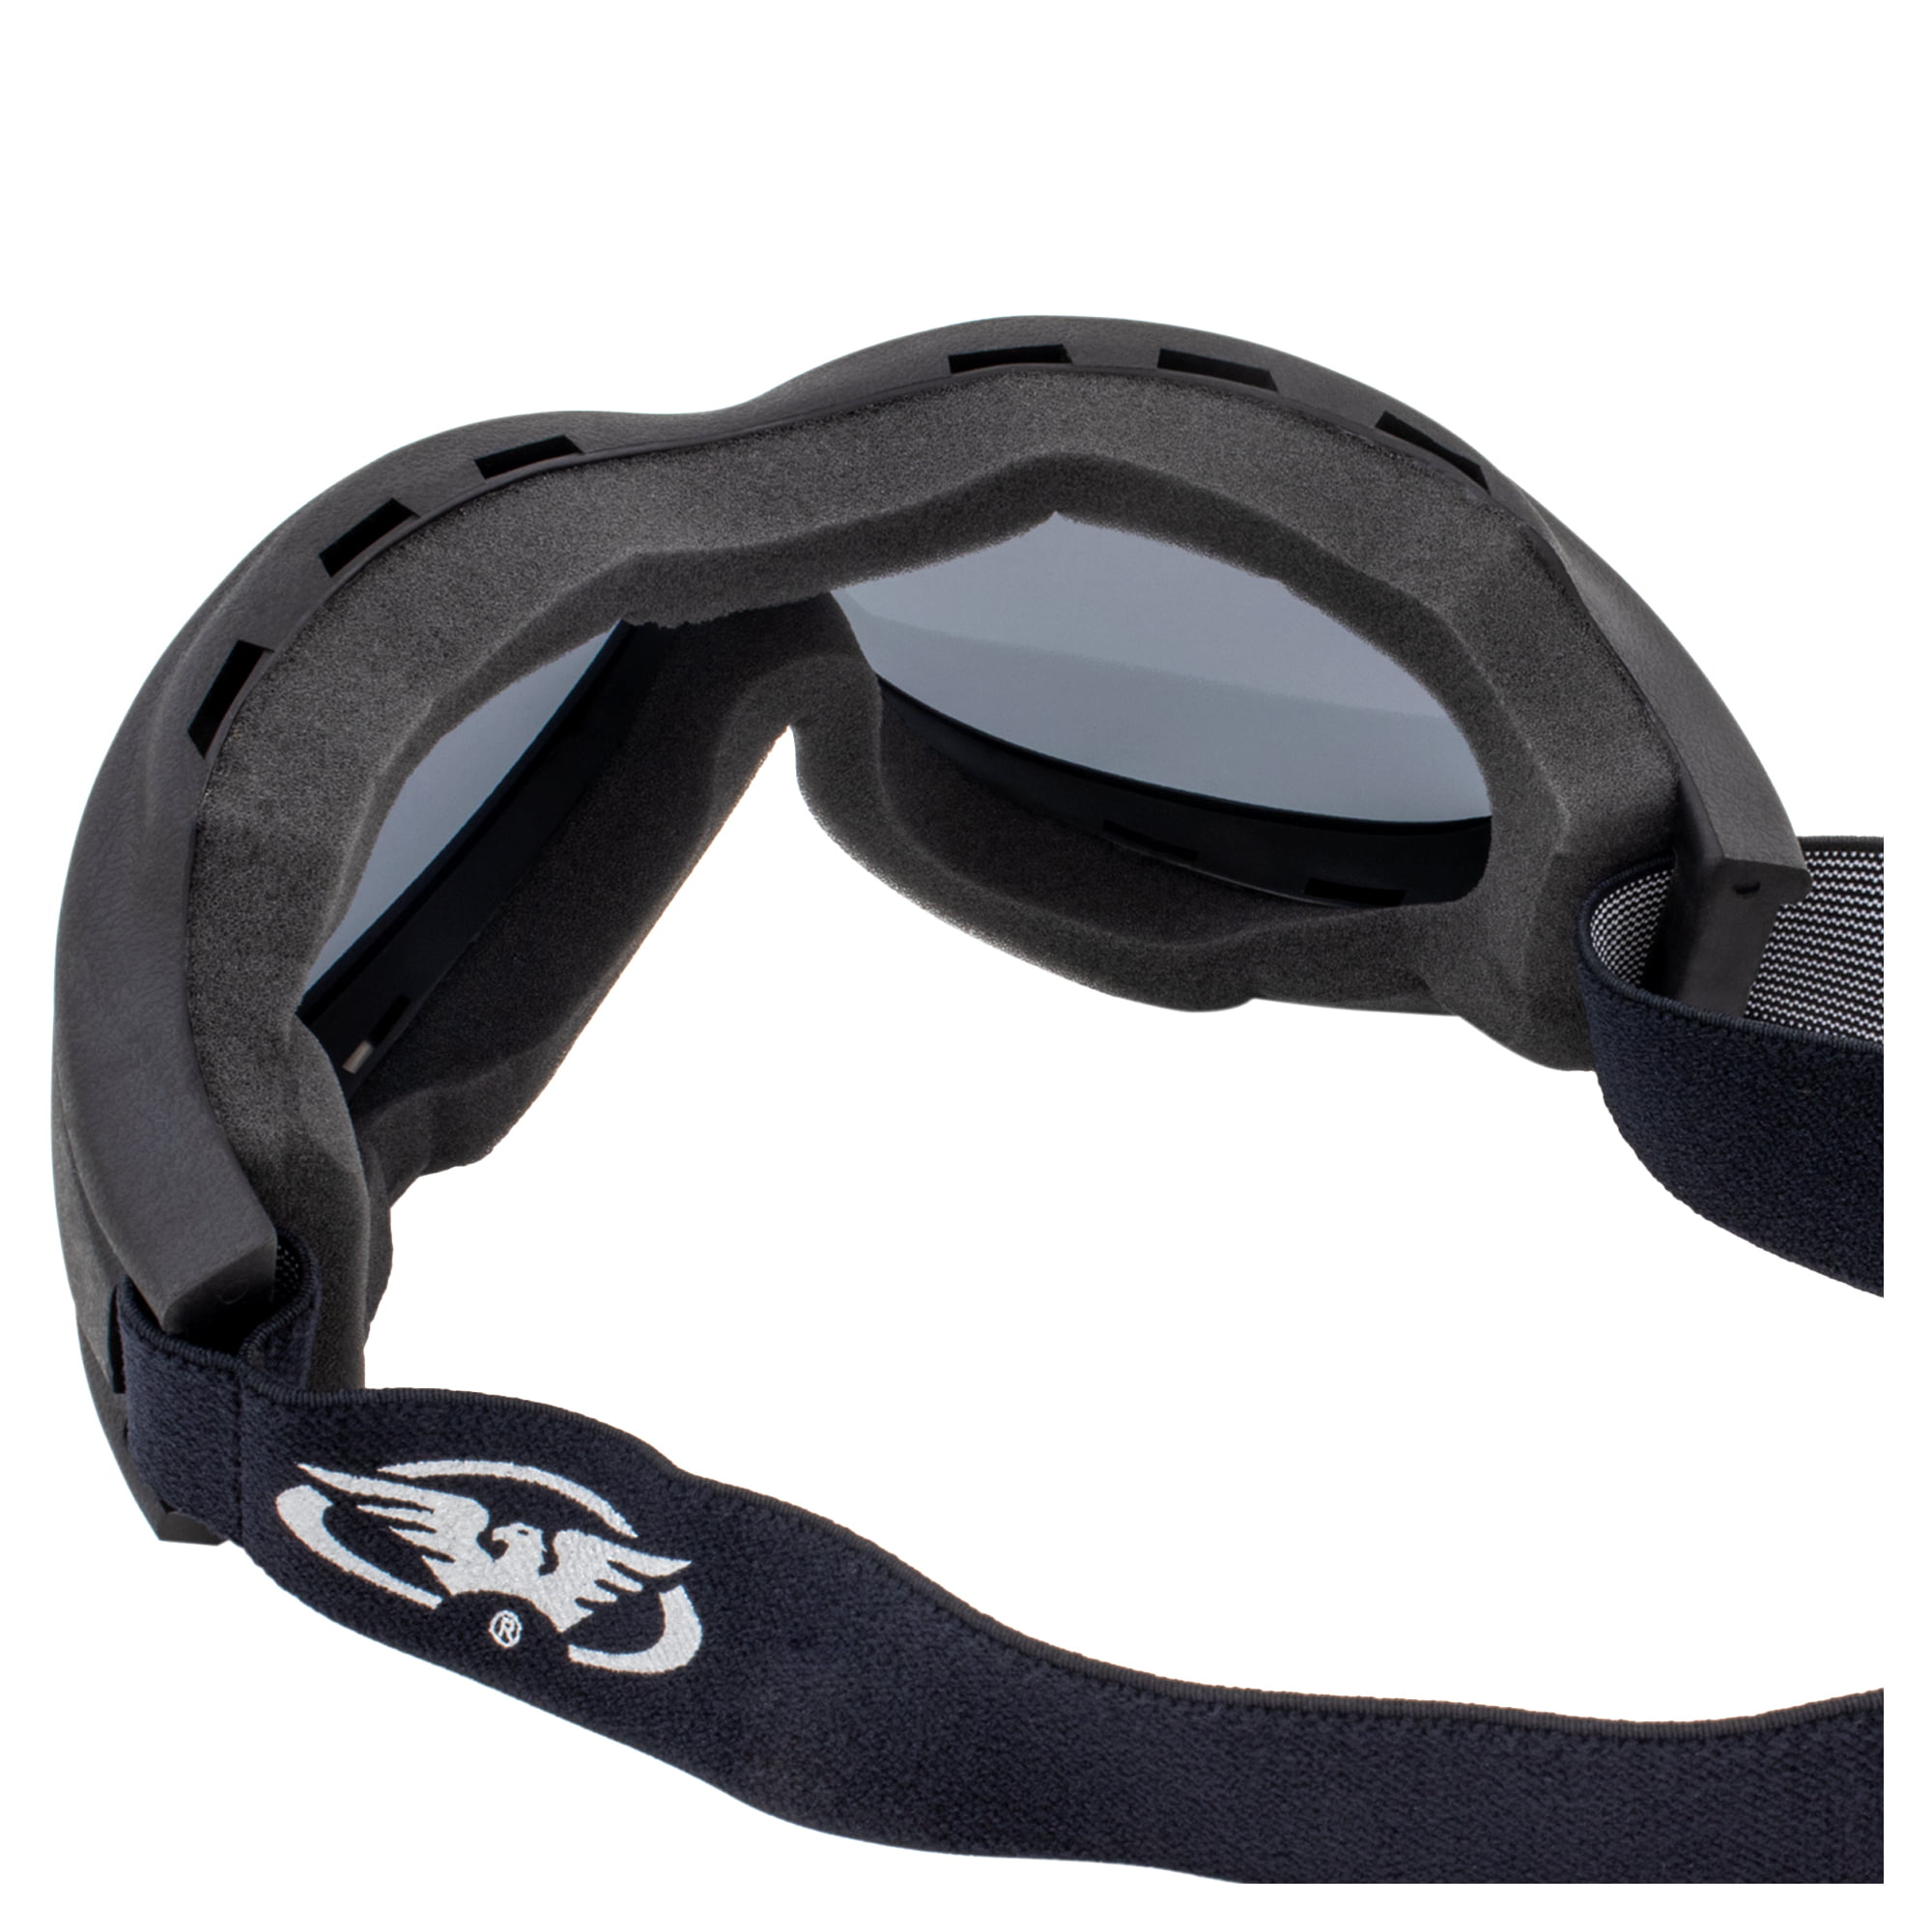 Global Vision Big Ben Goggles 2 Pairs Black Frames 1 Clear Lens 1 Smoke Lens 